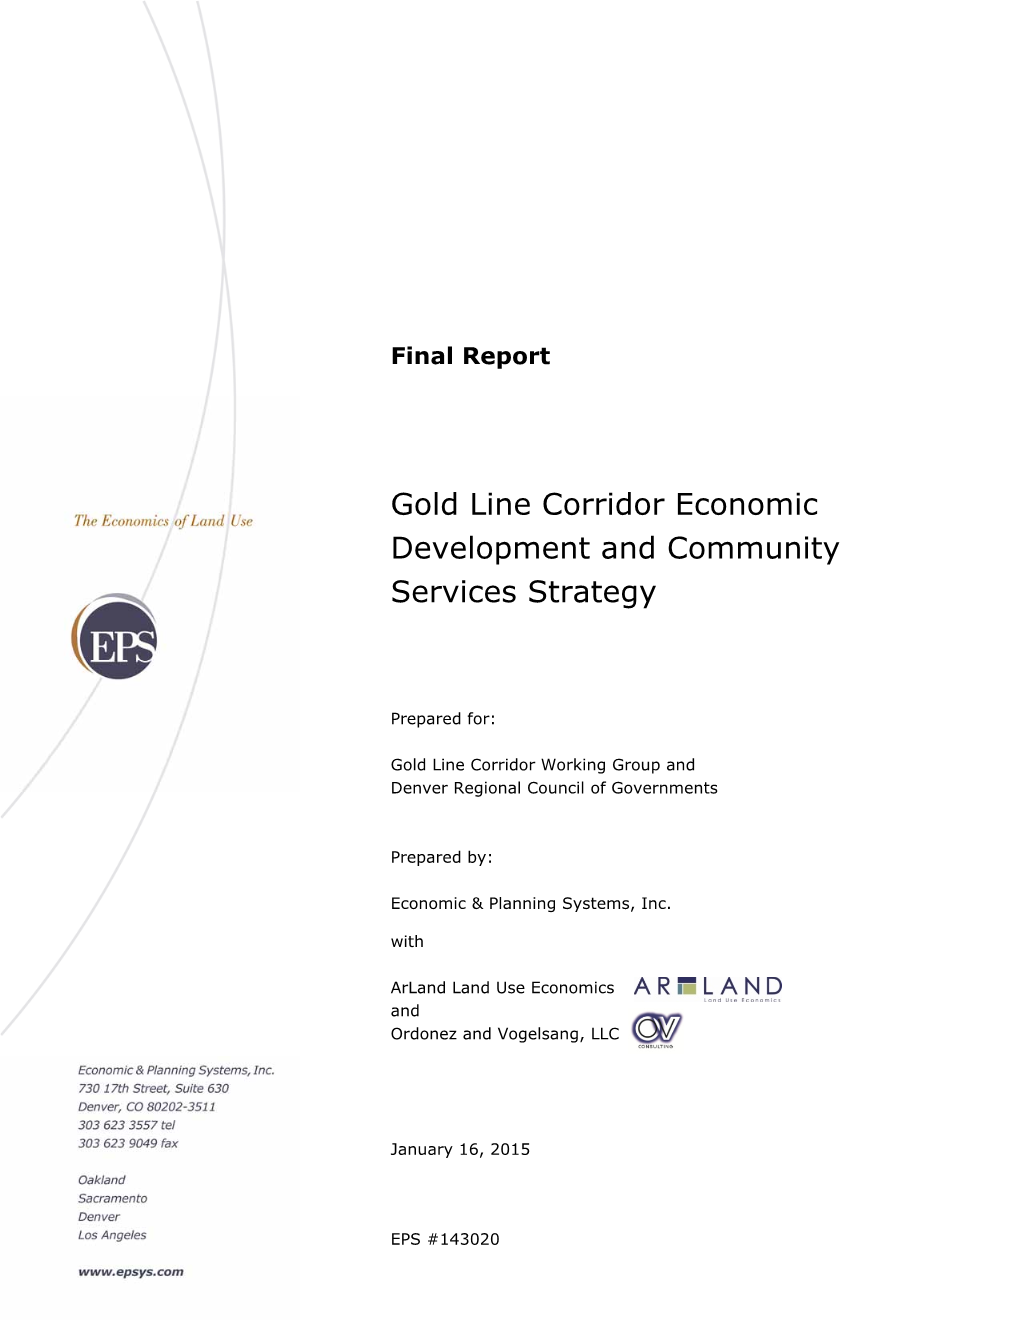 Gold Line Corridor Economic Development and Community Services Strategy